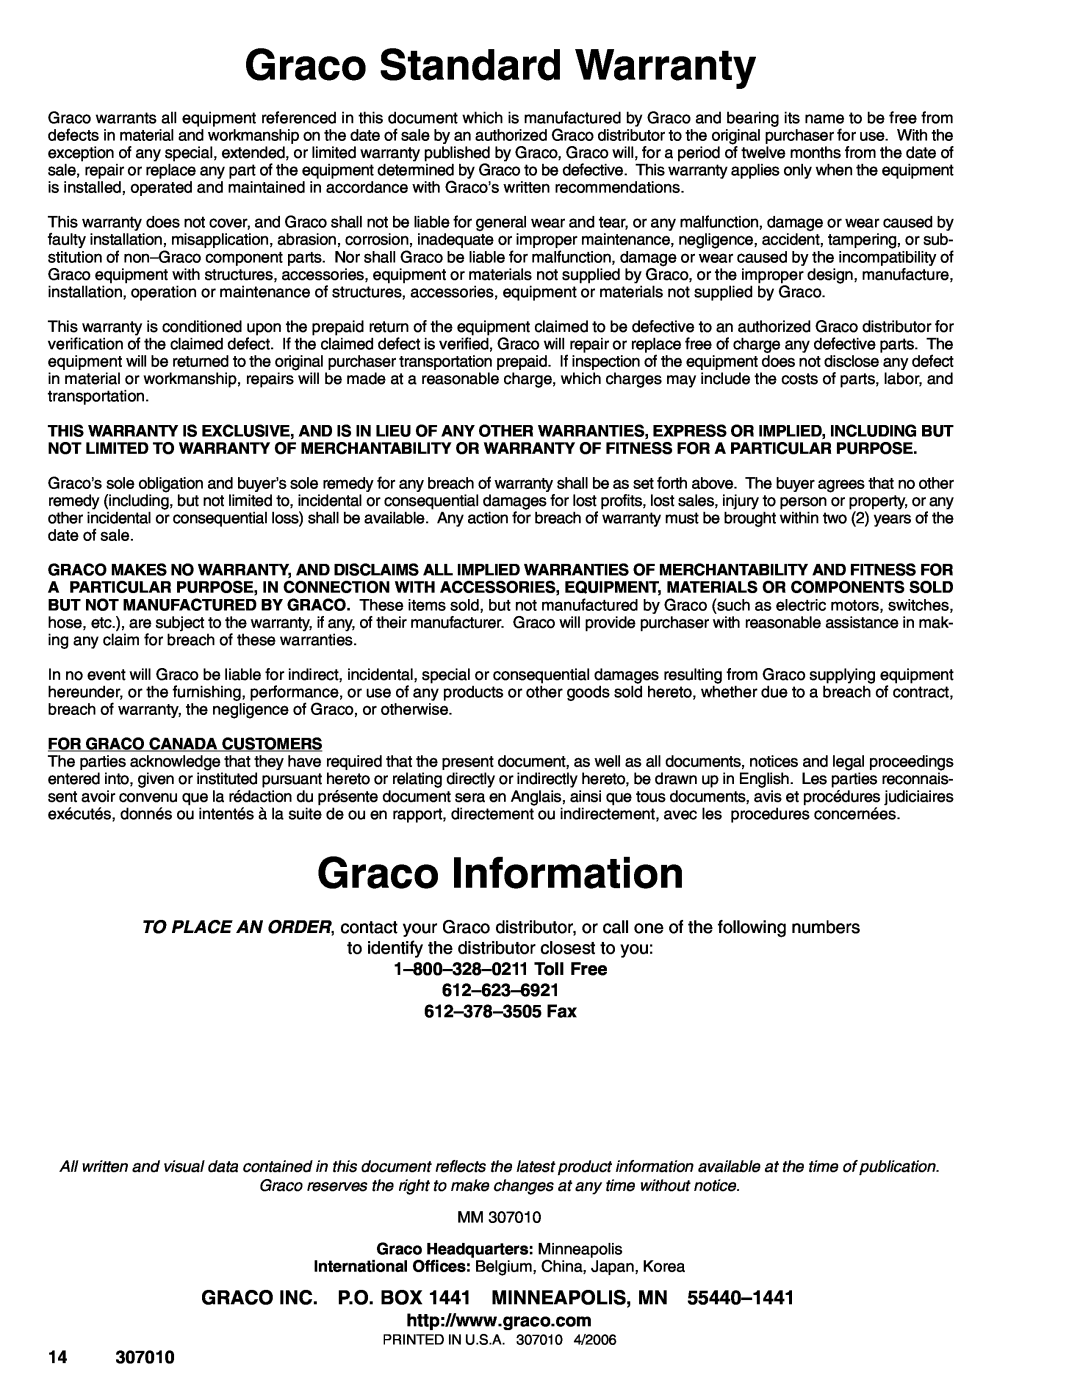 Graco Inc 307010L, 208008 Graco Standard Warranty, Graco Information, GRACO INC. P.O. BOX 1441 MINNEAPOLIS, MN 